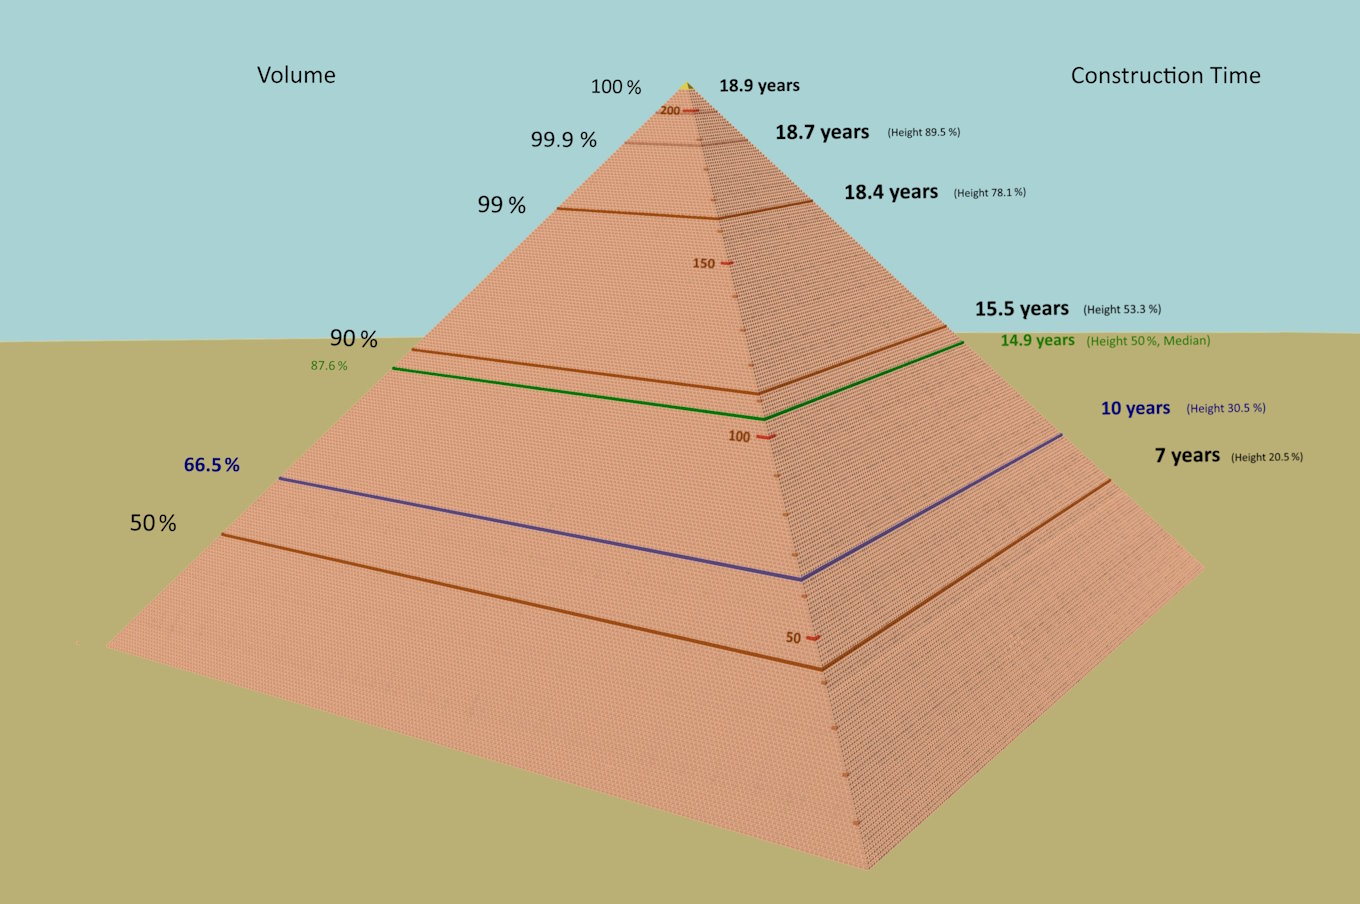 Cheops Pyramid